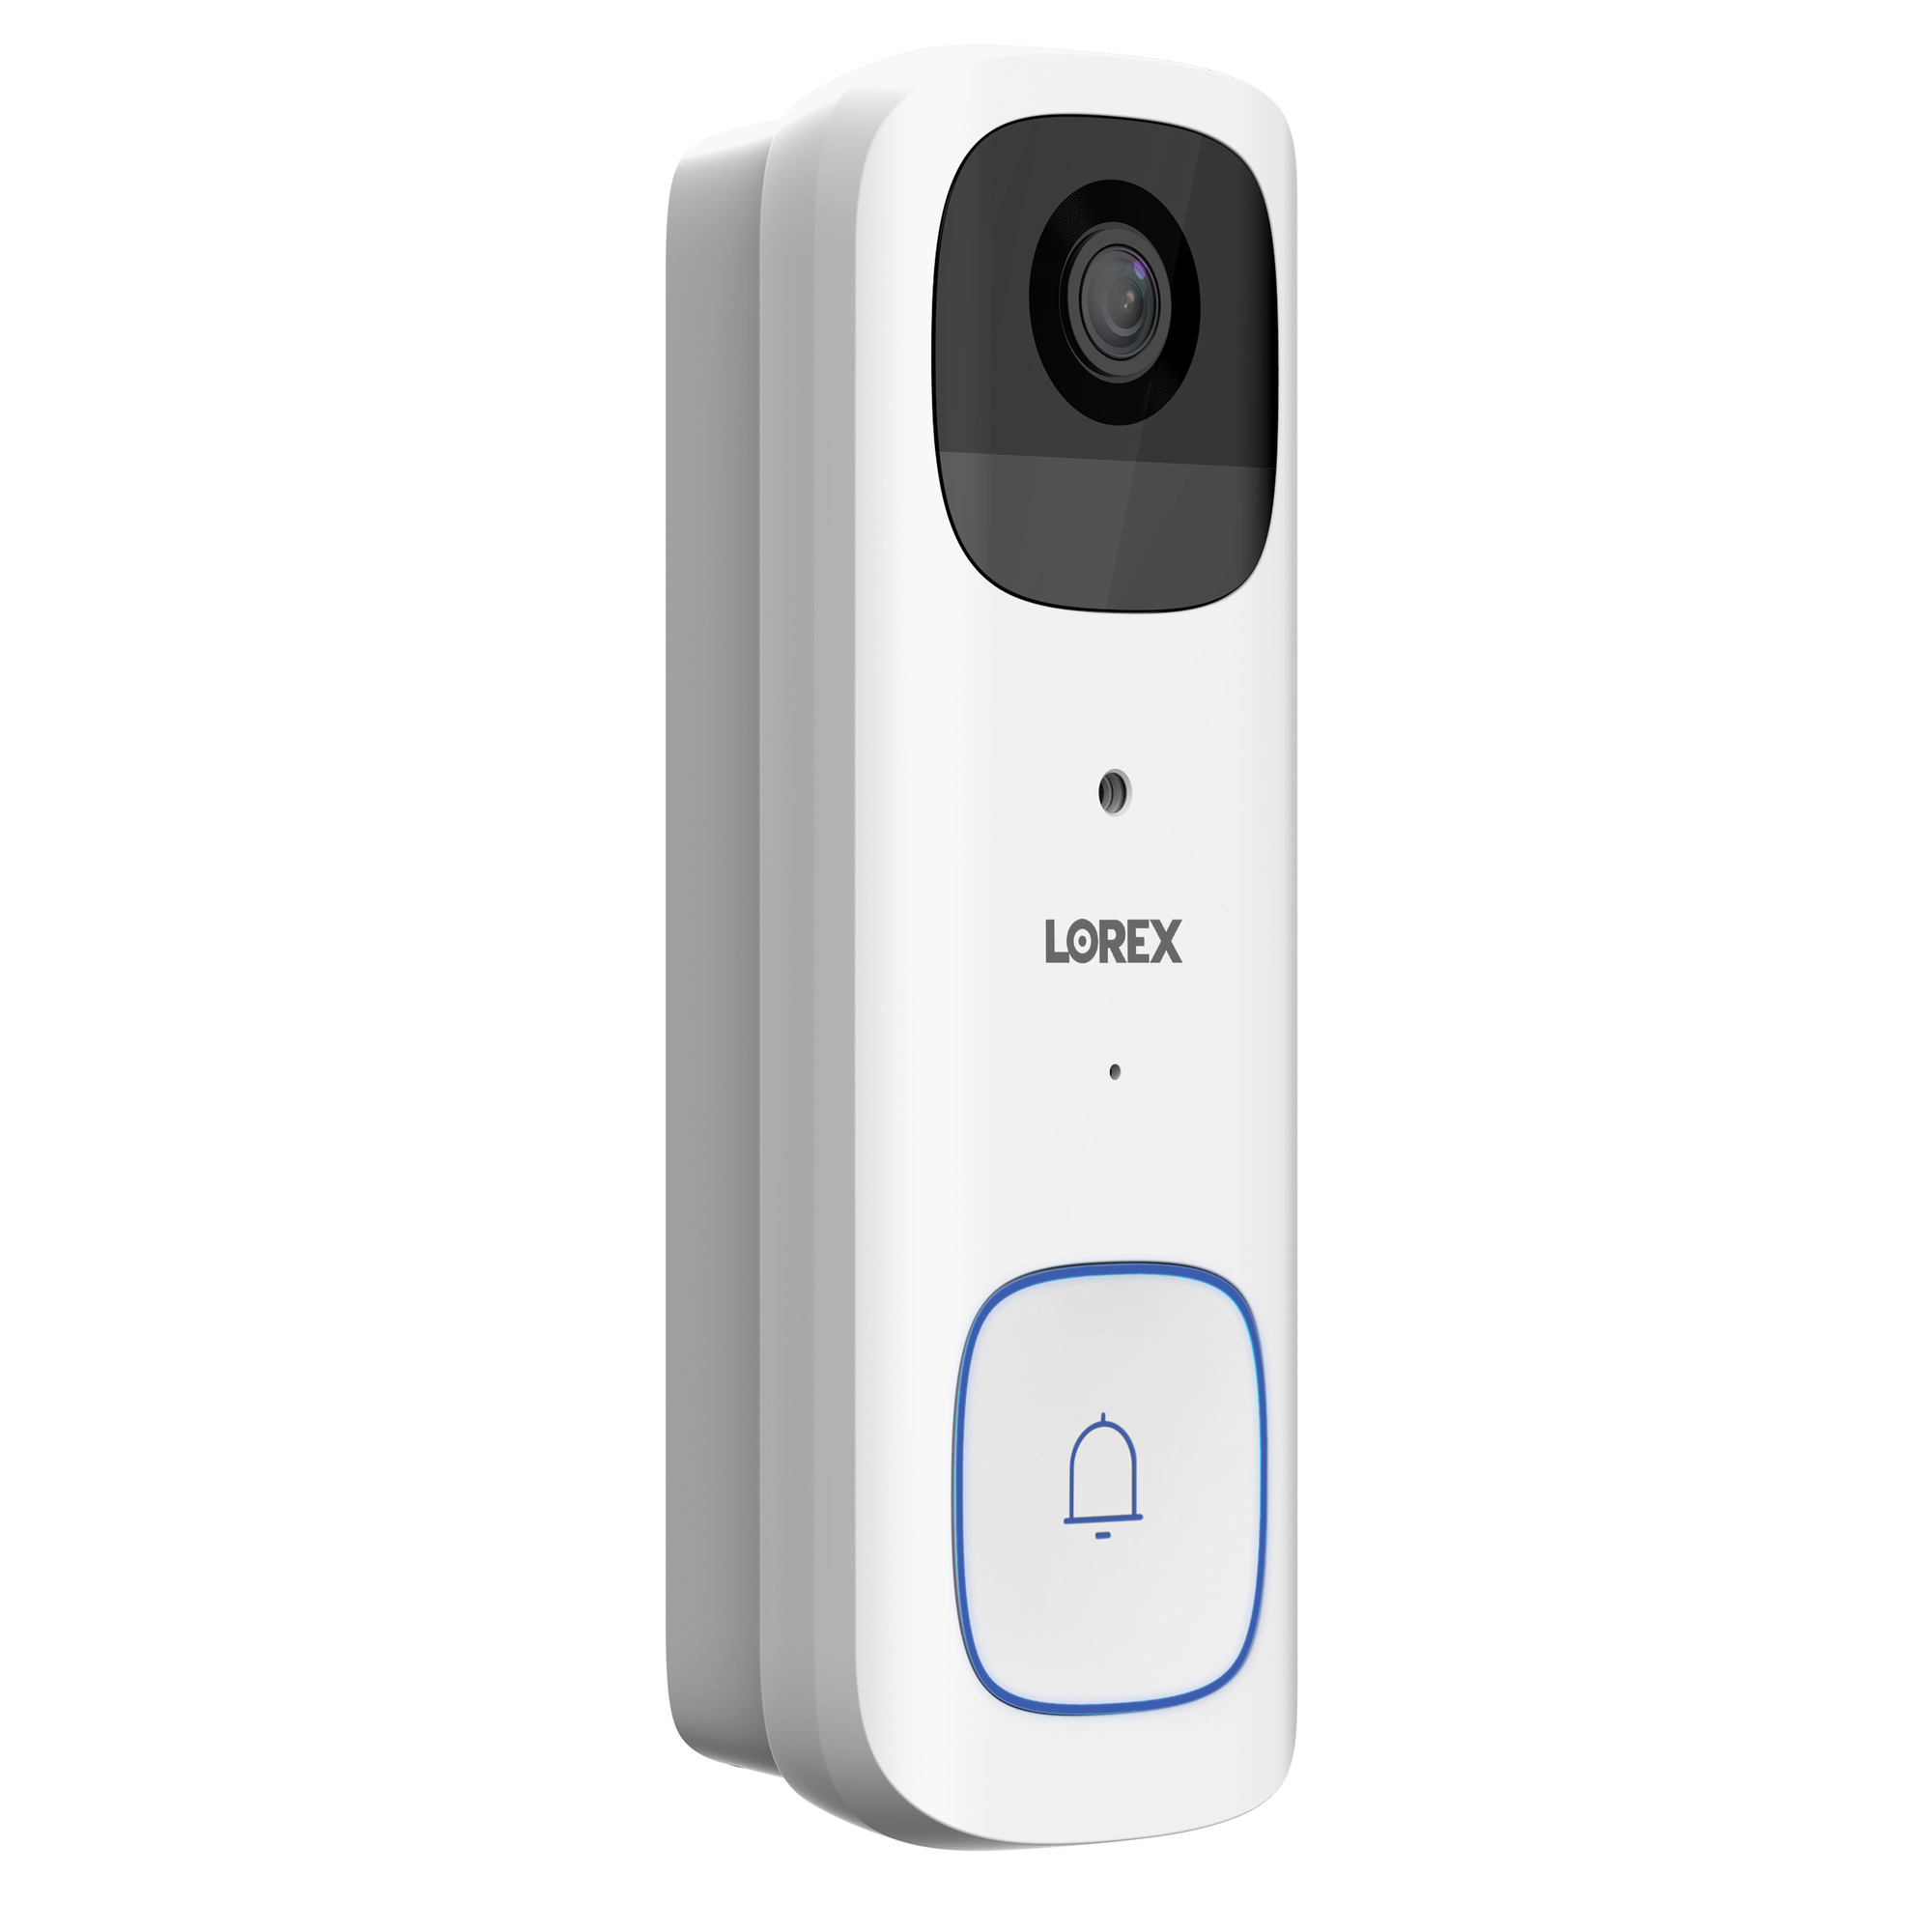 Lorex, 2K Battery Video Doorbell White, Product Style DVR/monitoring kit, Camera (qty.) 1 Resolution 2K, Model B463AJD-E